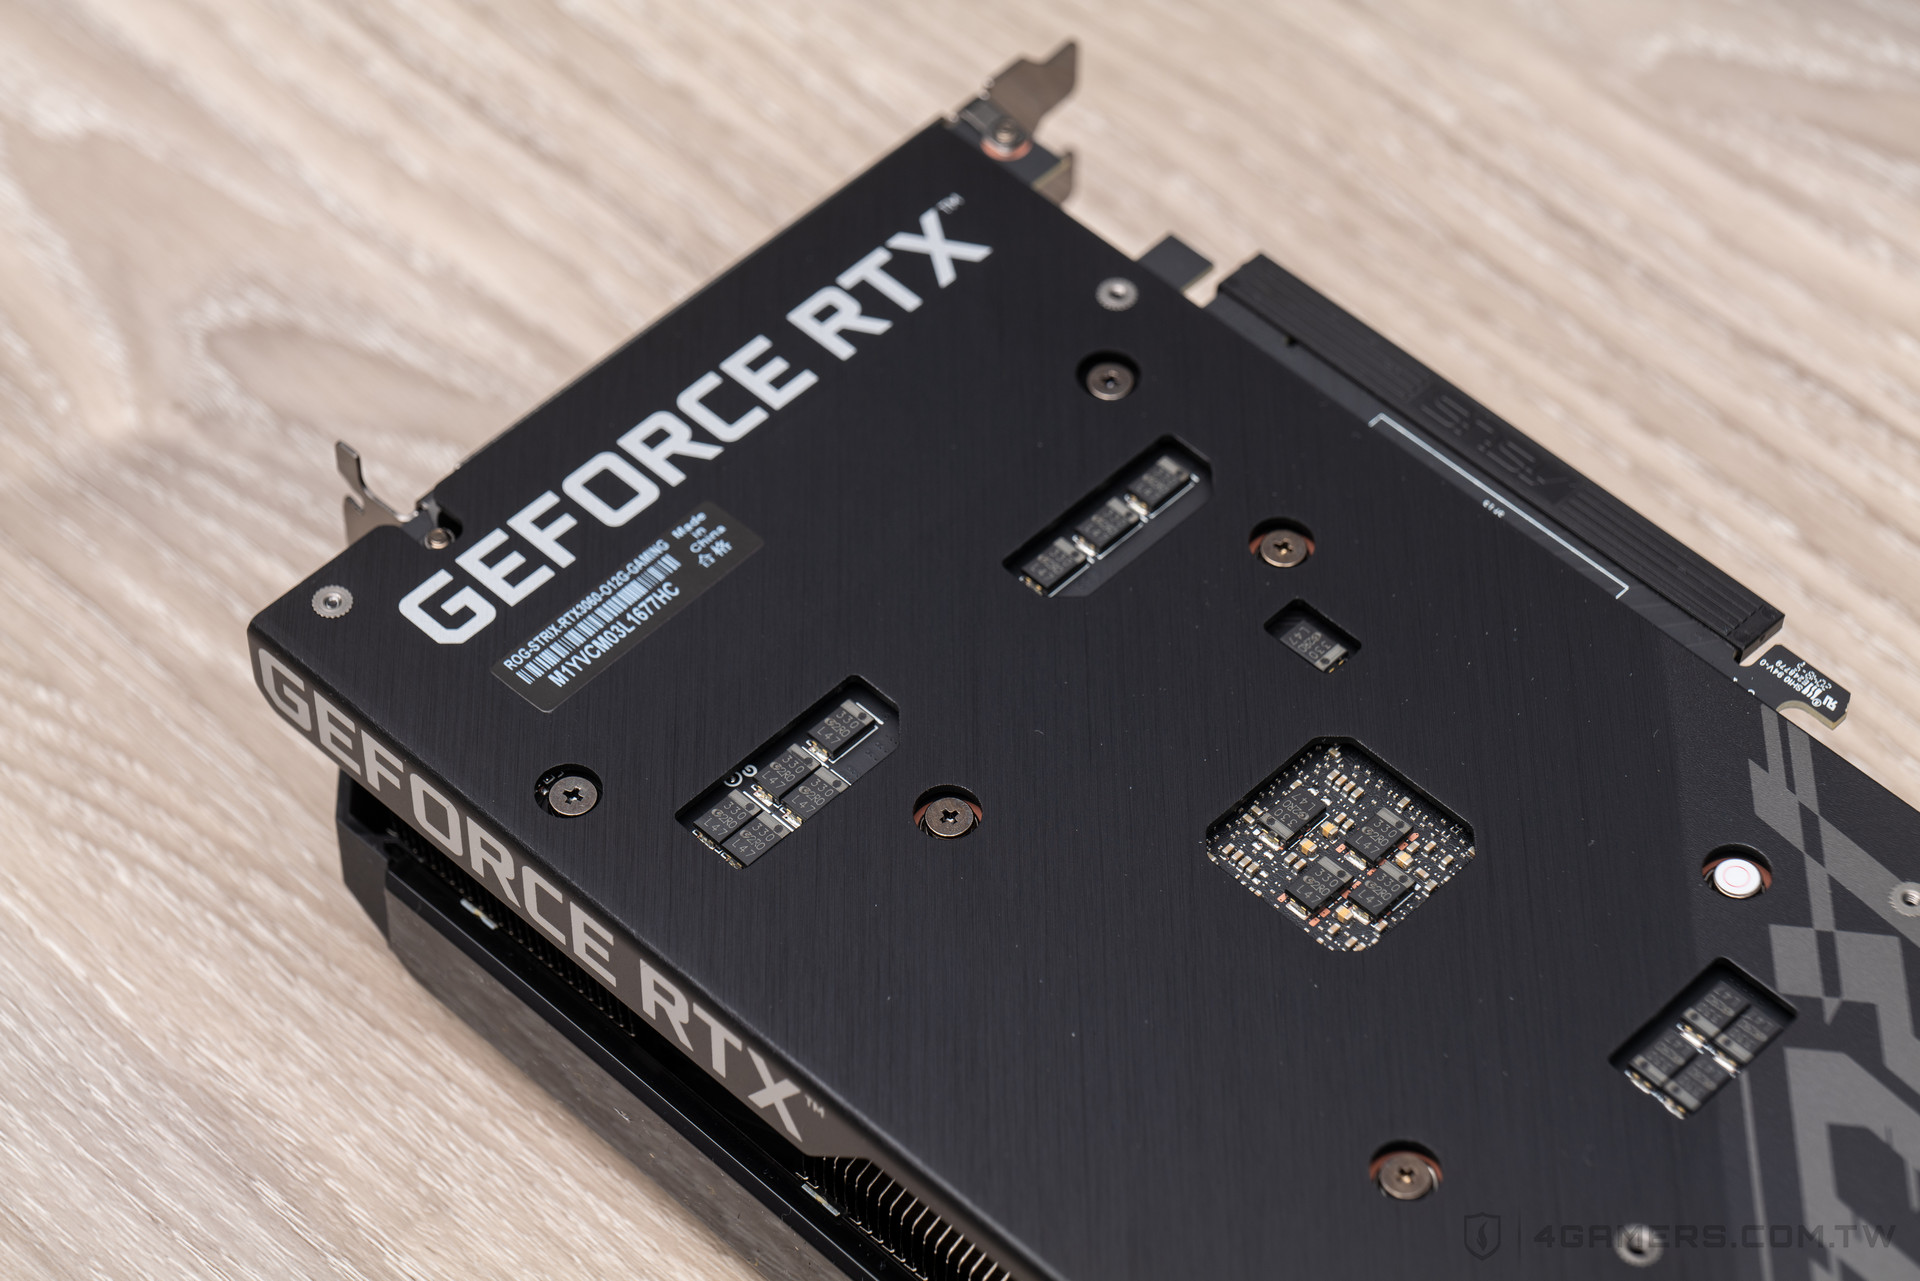 ASUS ROG Strix GeForce RTX 3060 O8G